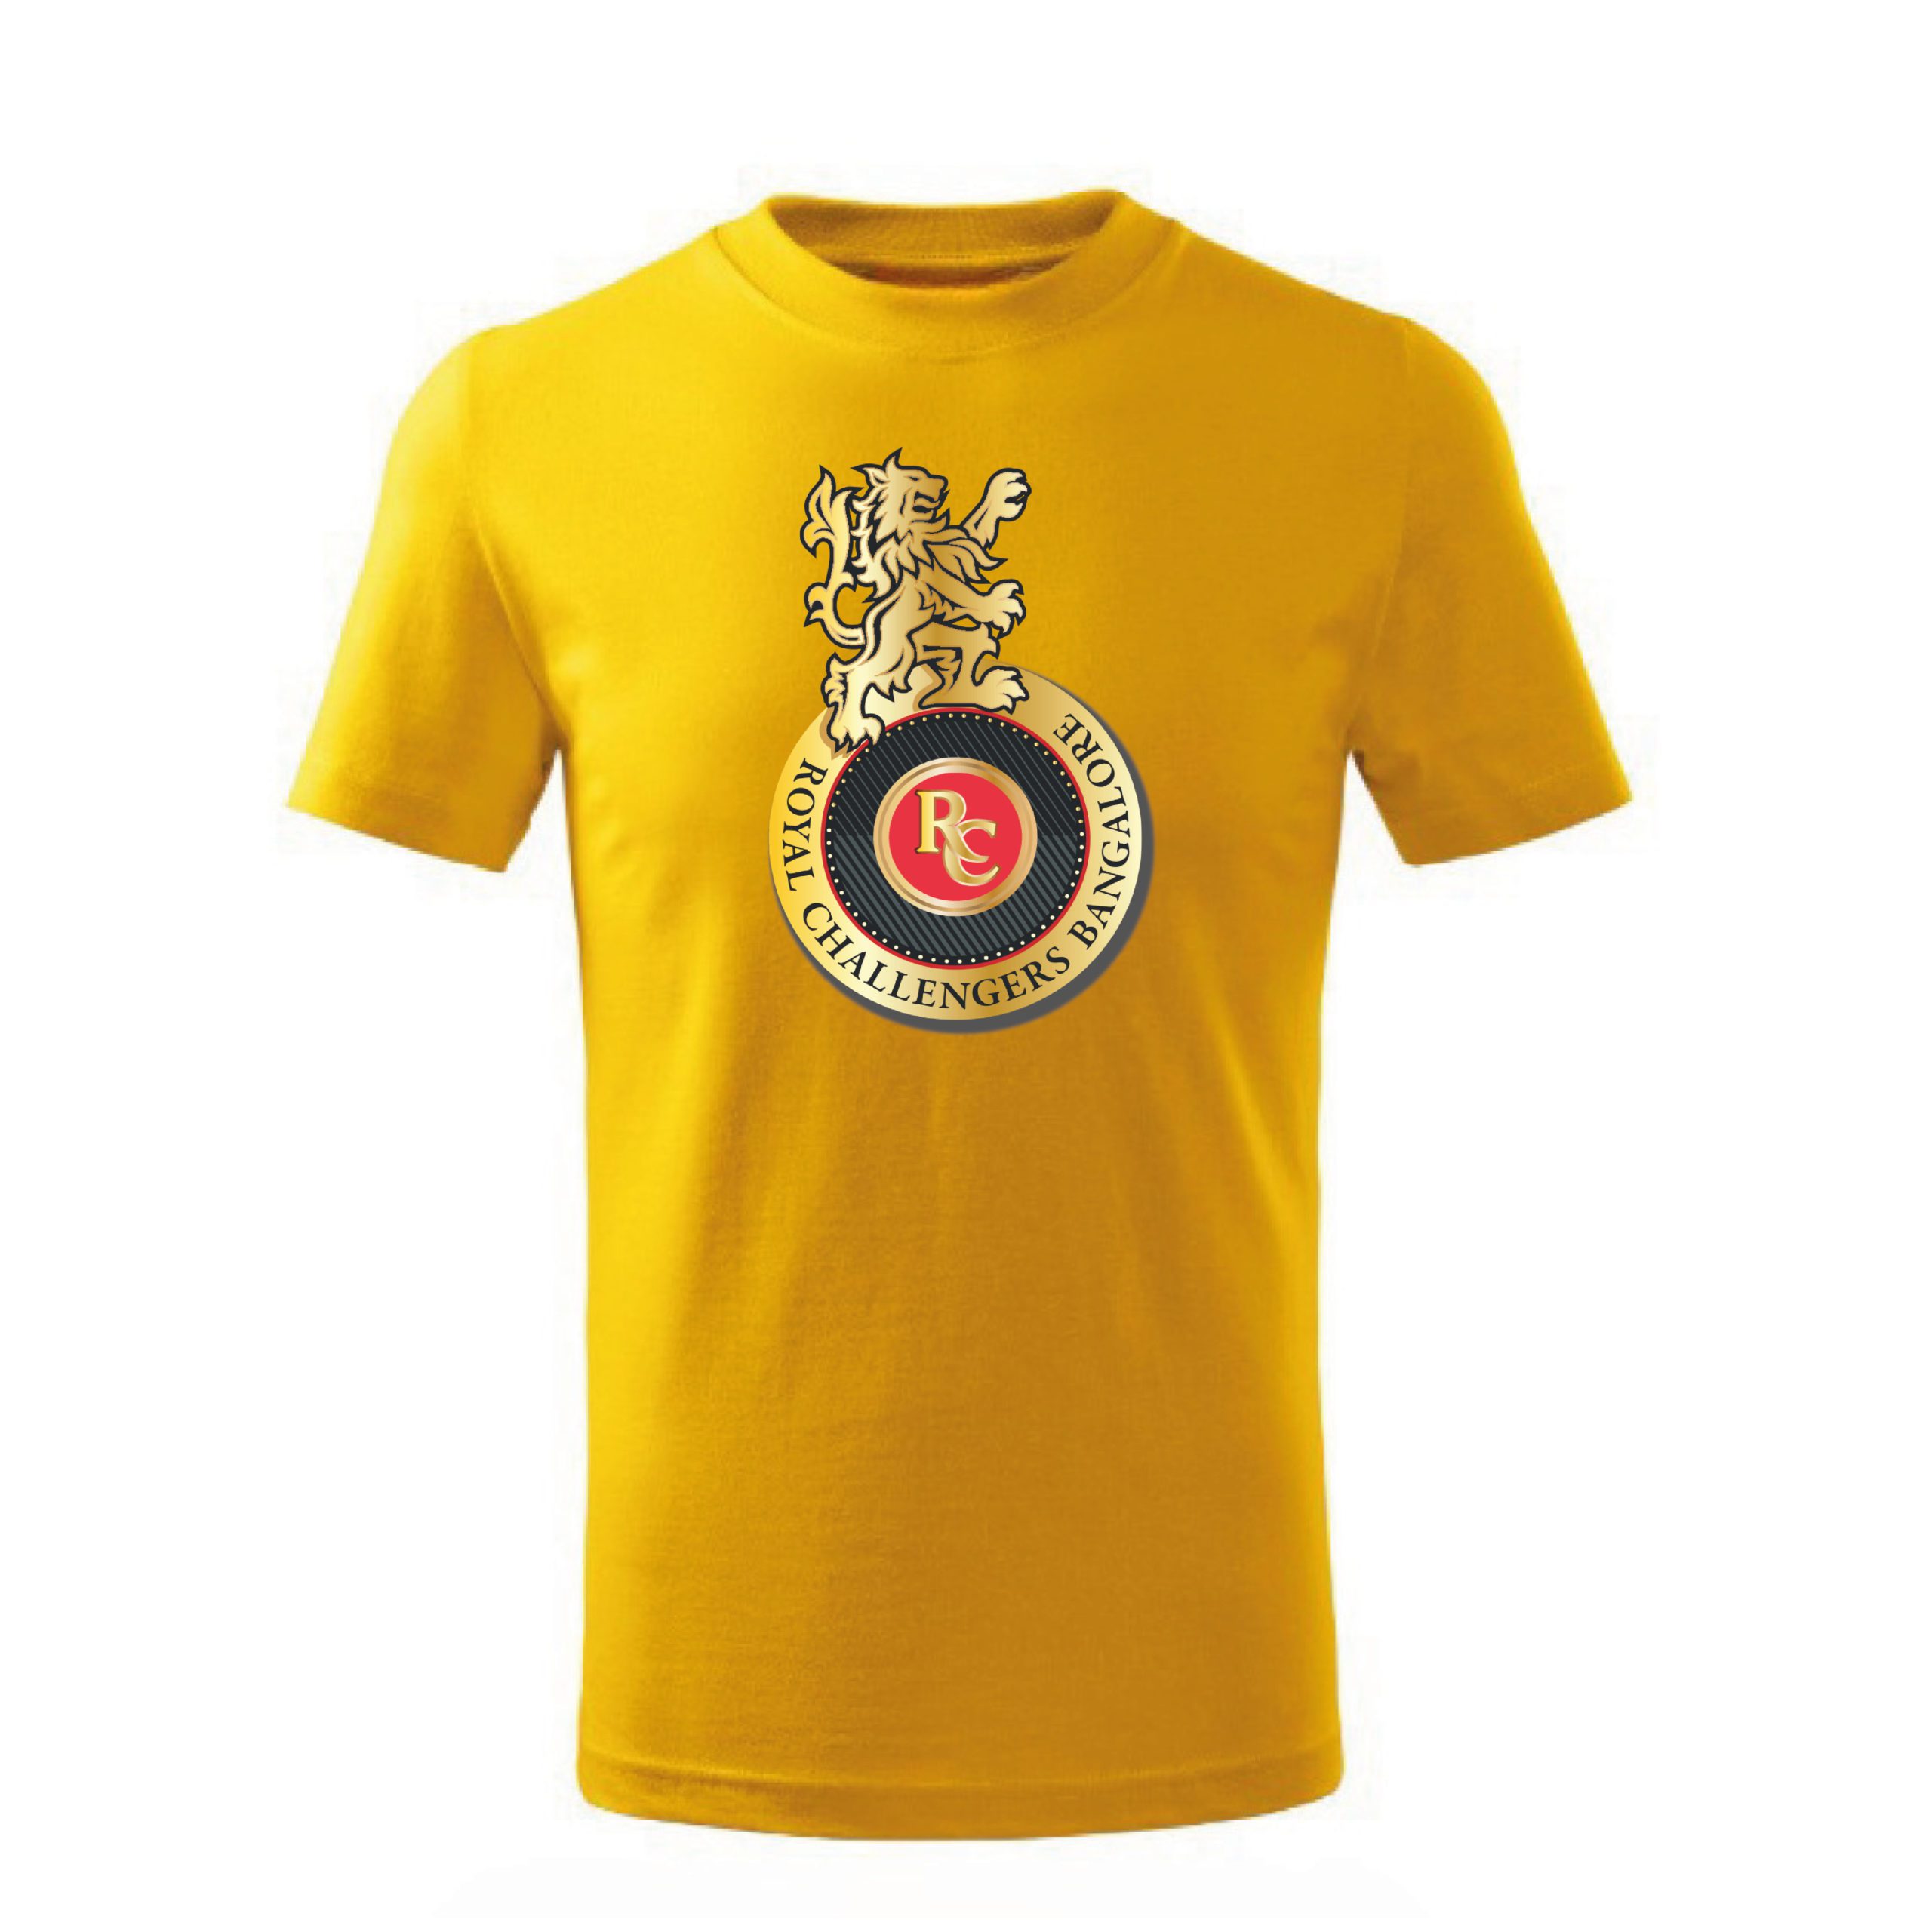 IPL T-shirt for RCB (Royal Challengers Bangalore)